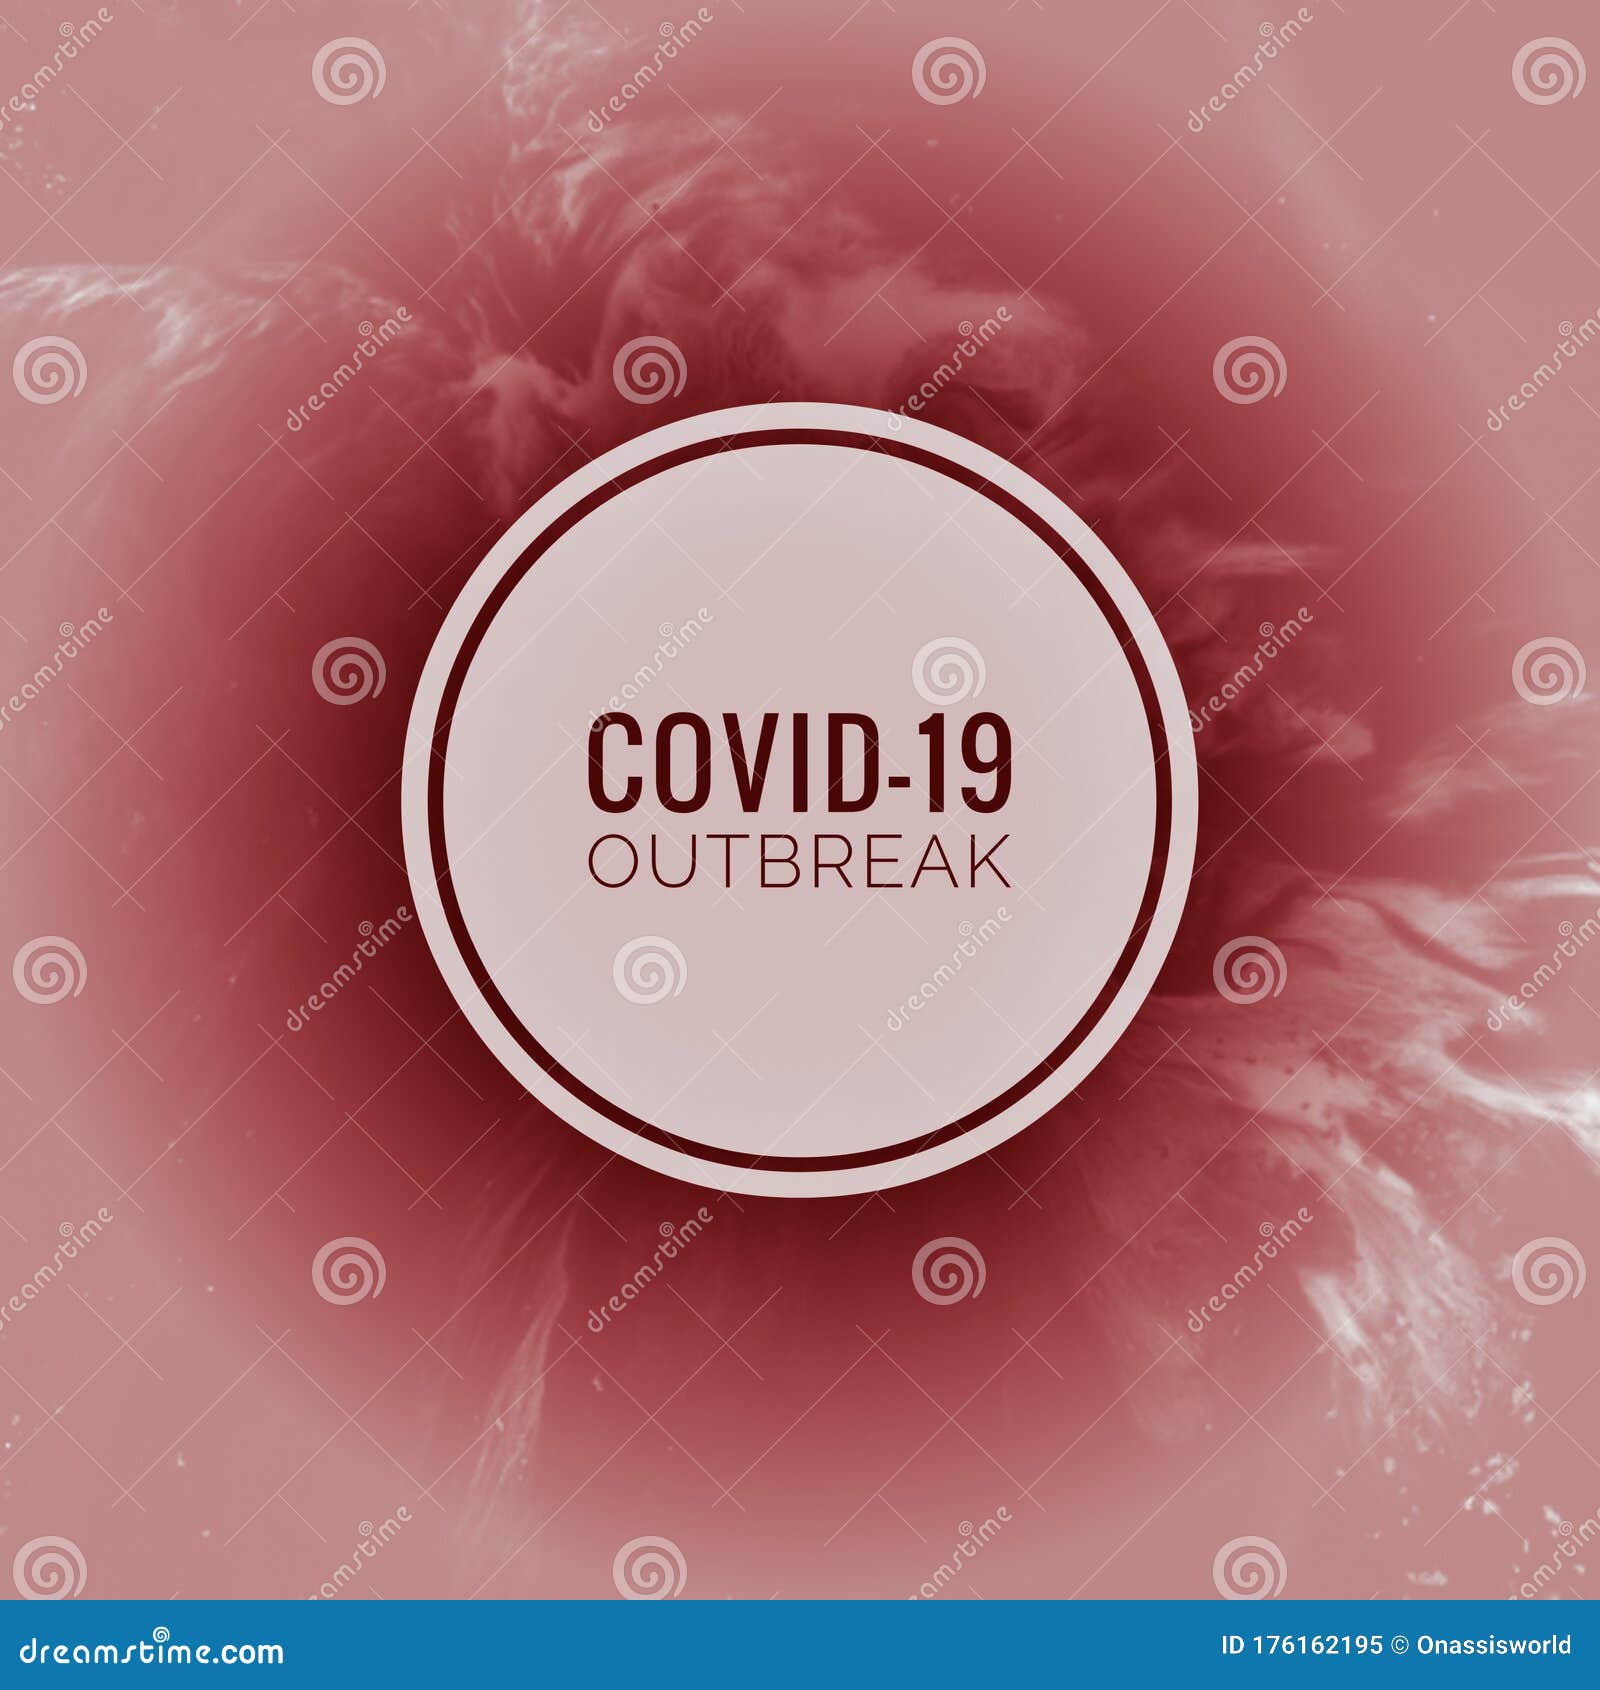 virus covid-19 global outbreak spreading